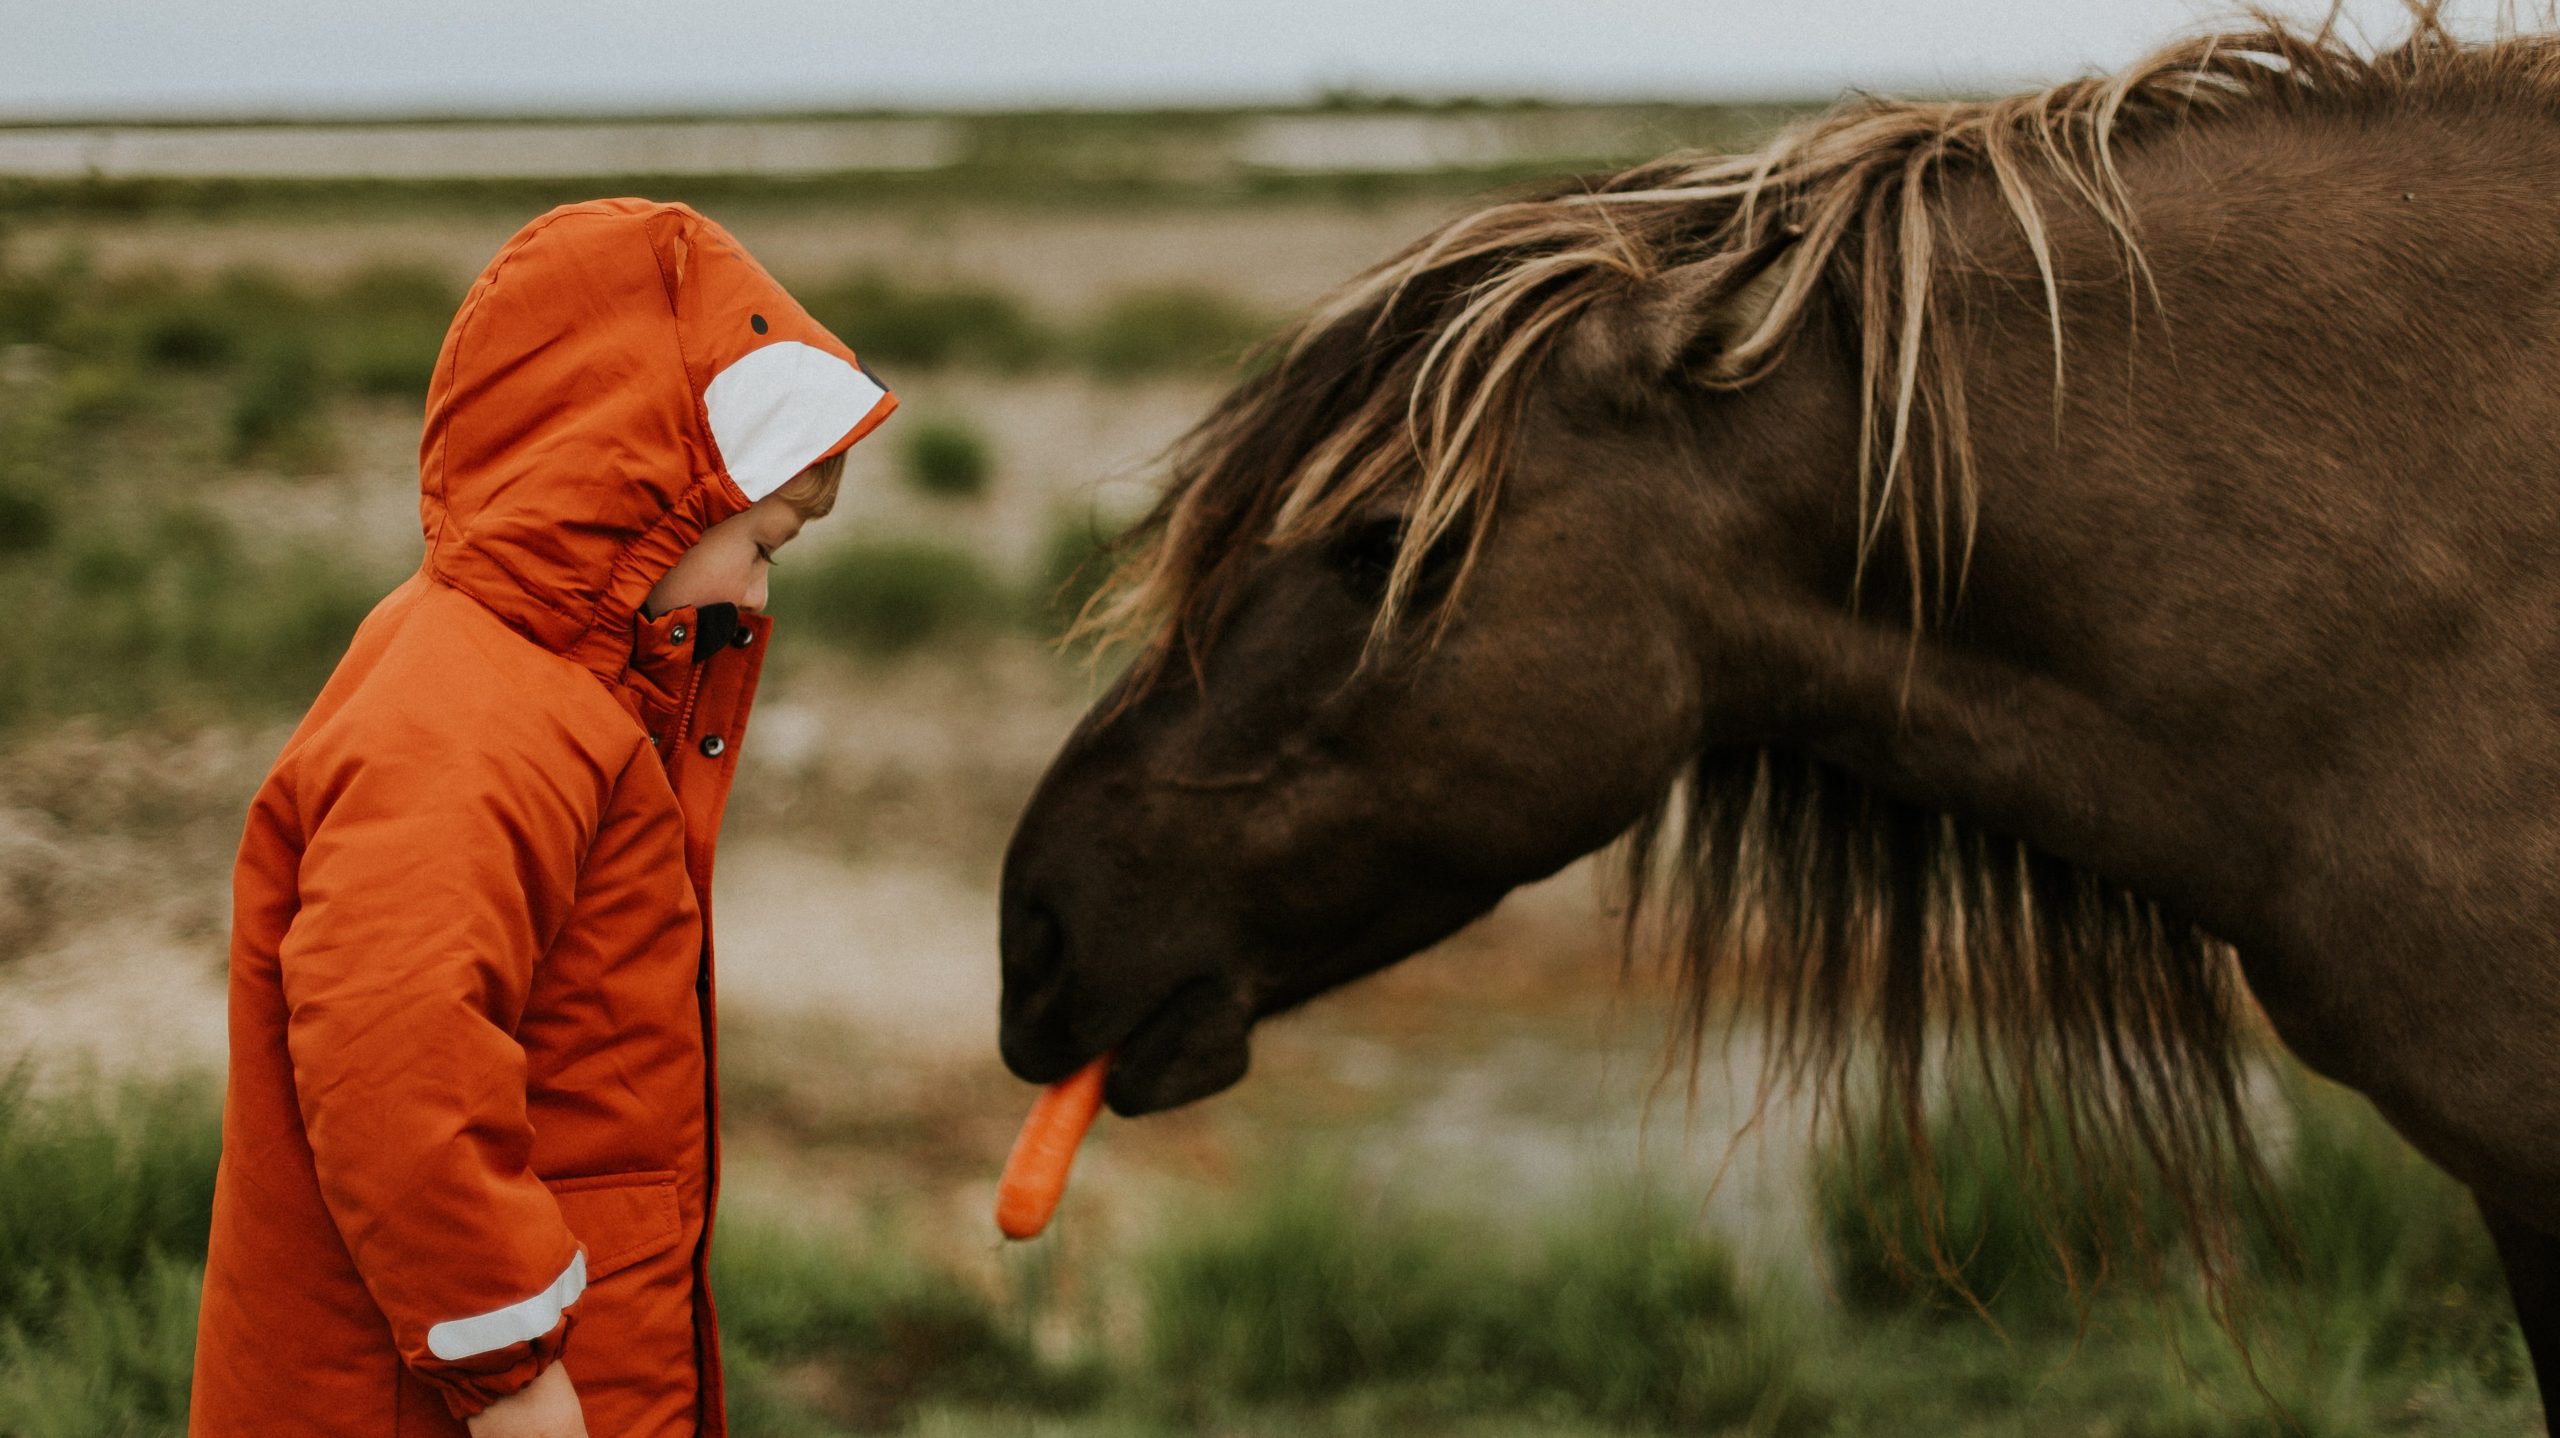 kid feeding horse at unbridled discovery farm